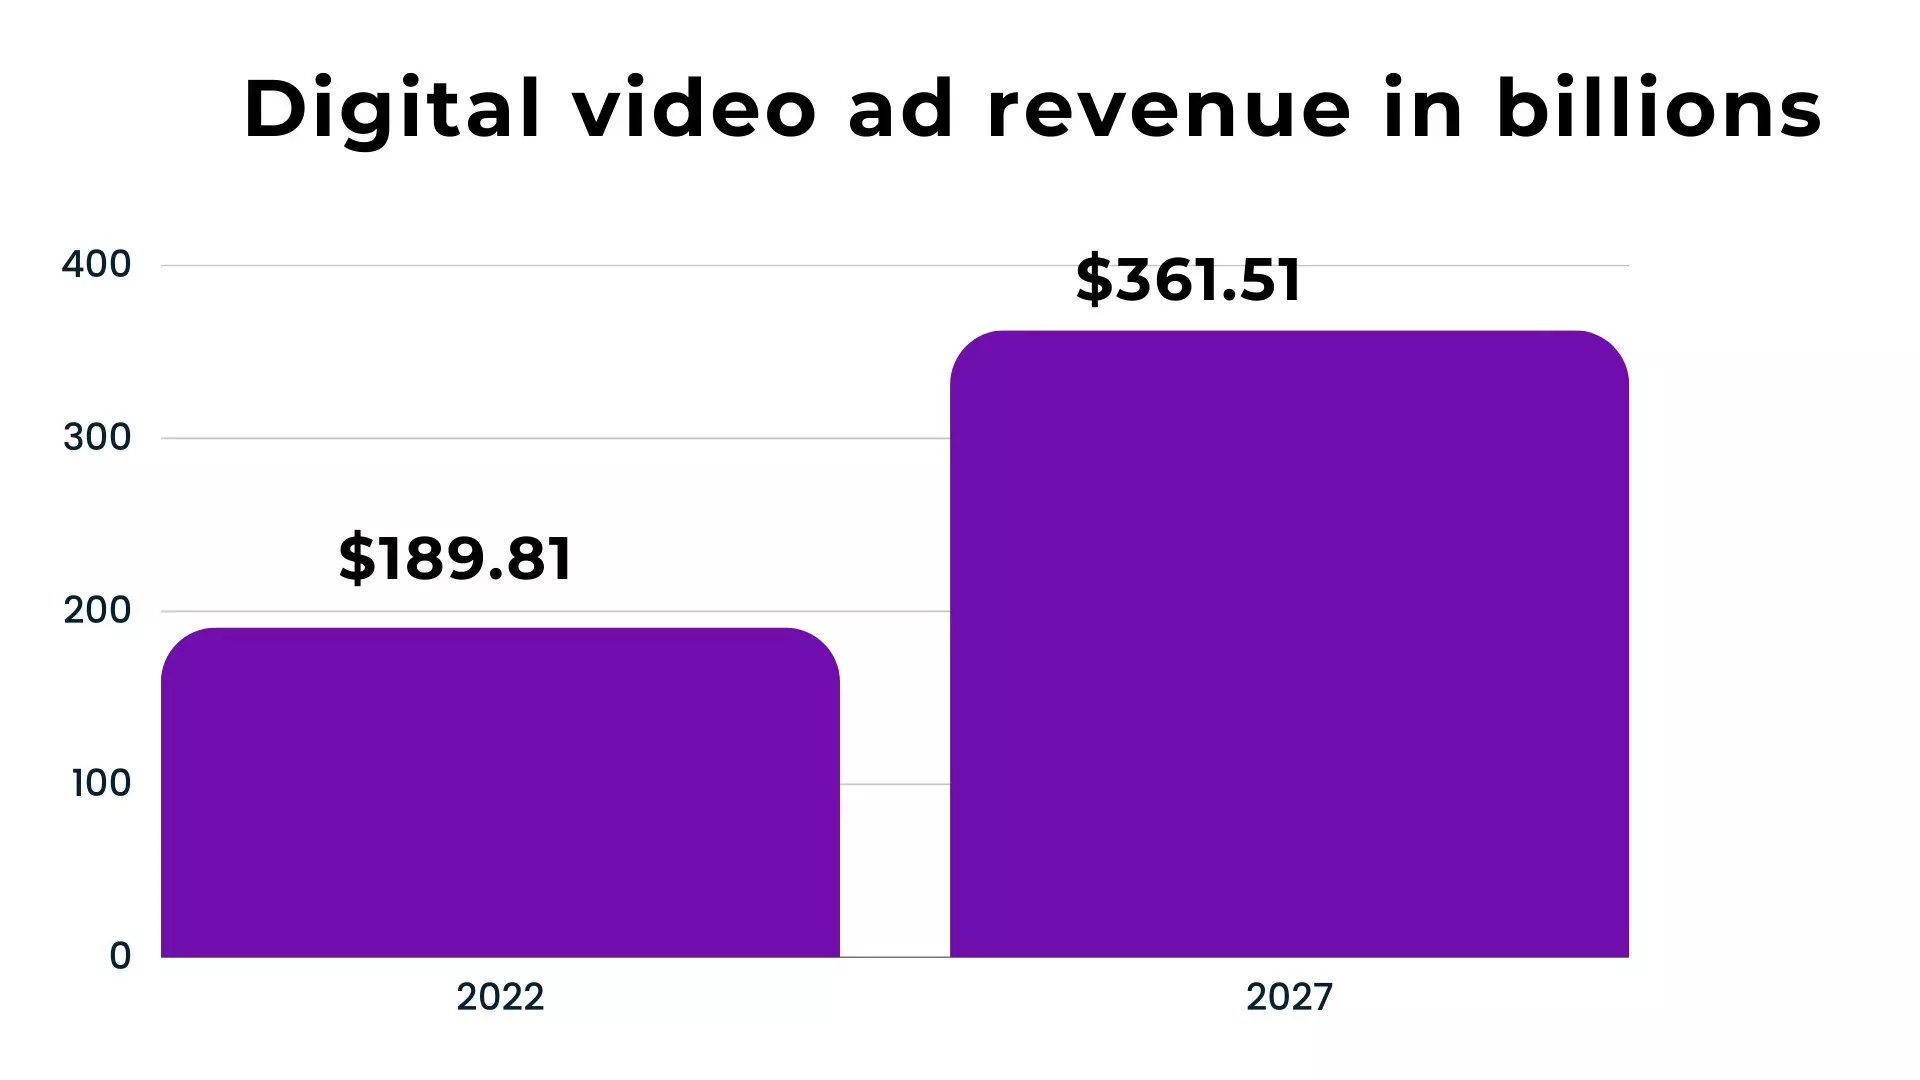 Digital video ad revenue